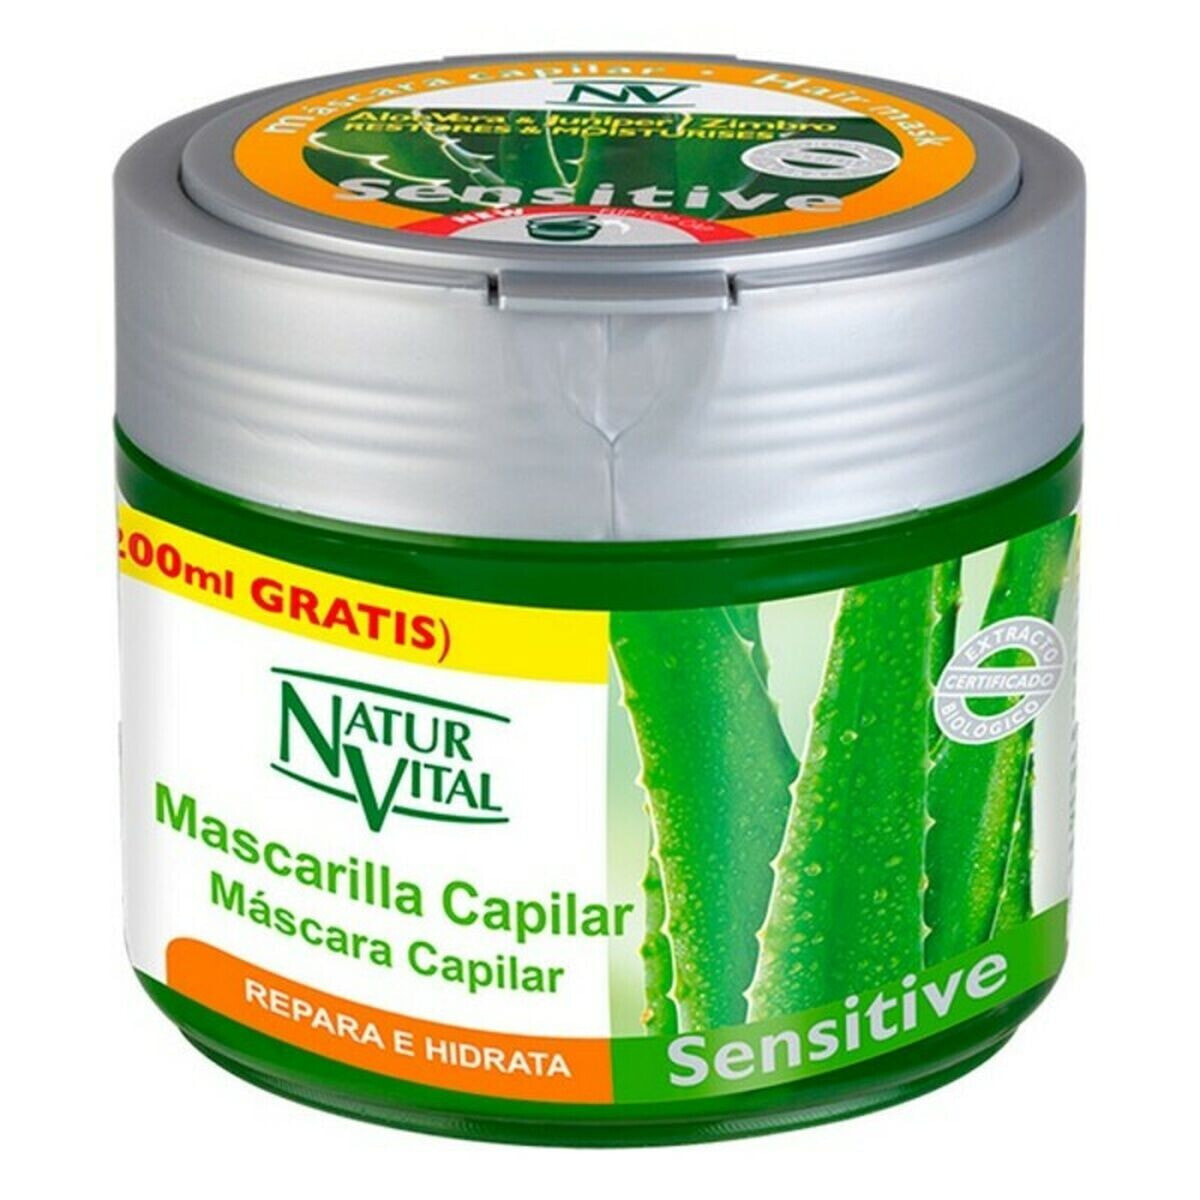 Восстанавливающая капиллярная маска Sensitive Naturaleza y Vida Mascarilla Repara E Hidrata (500 ml) 500 ml